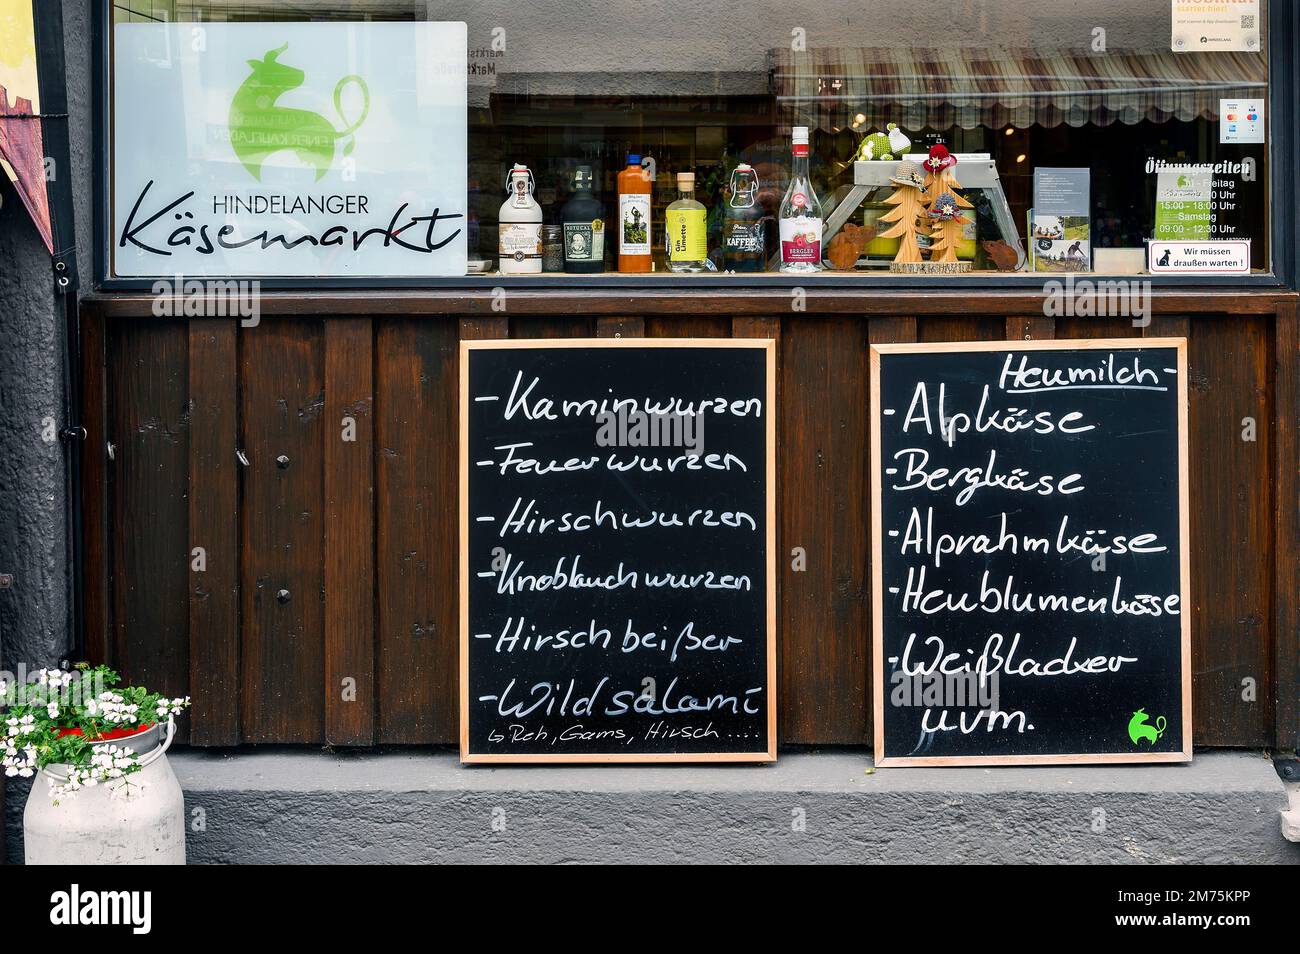 Vetrina del mercato del formaggio Hindelang, pubblicità per salsiccia e formaggio, Hindelang, Allgaeu, Baviera, Germania Foto Stock